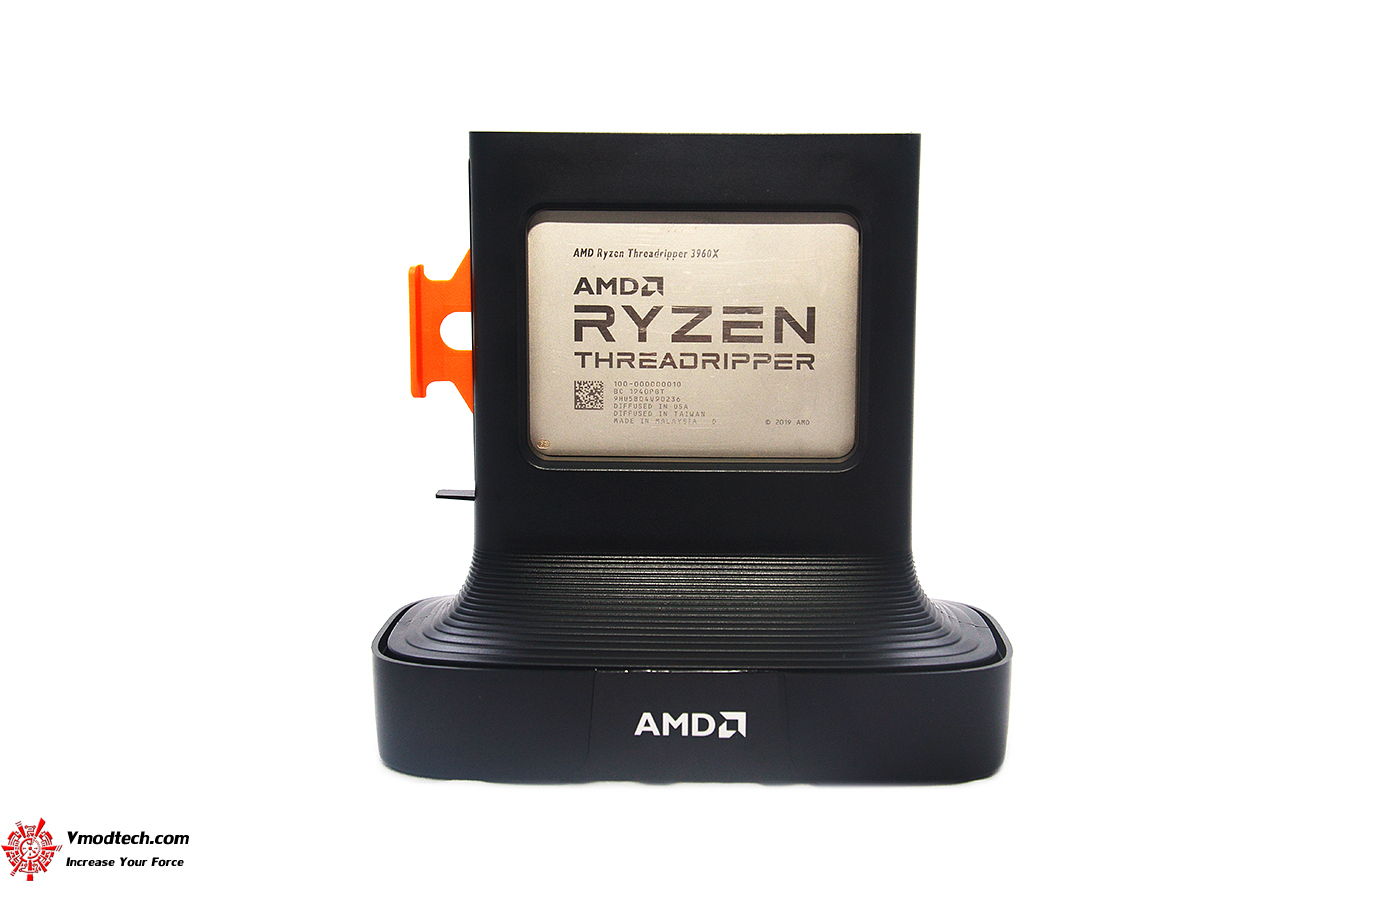 dsc 2803 AMD RYZEN THREADRIPPER 3960X PROCESSOR REVIEW